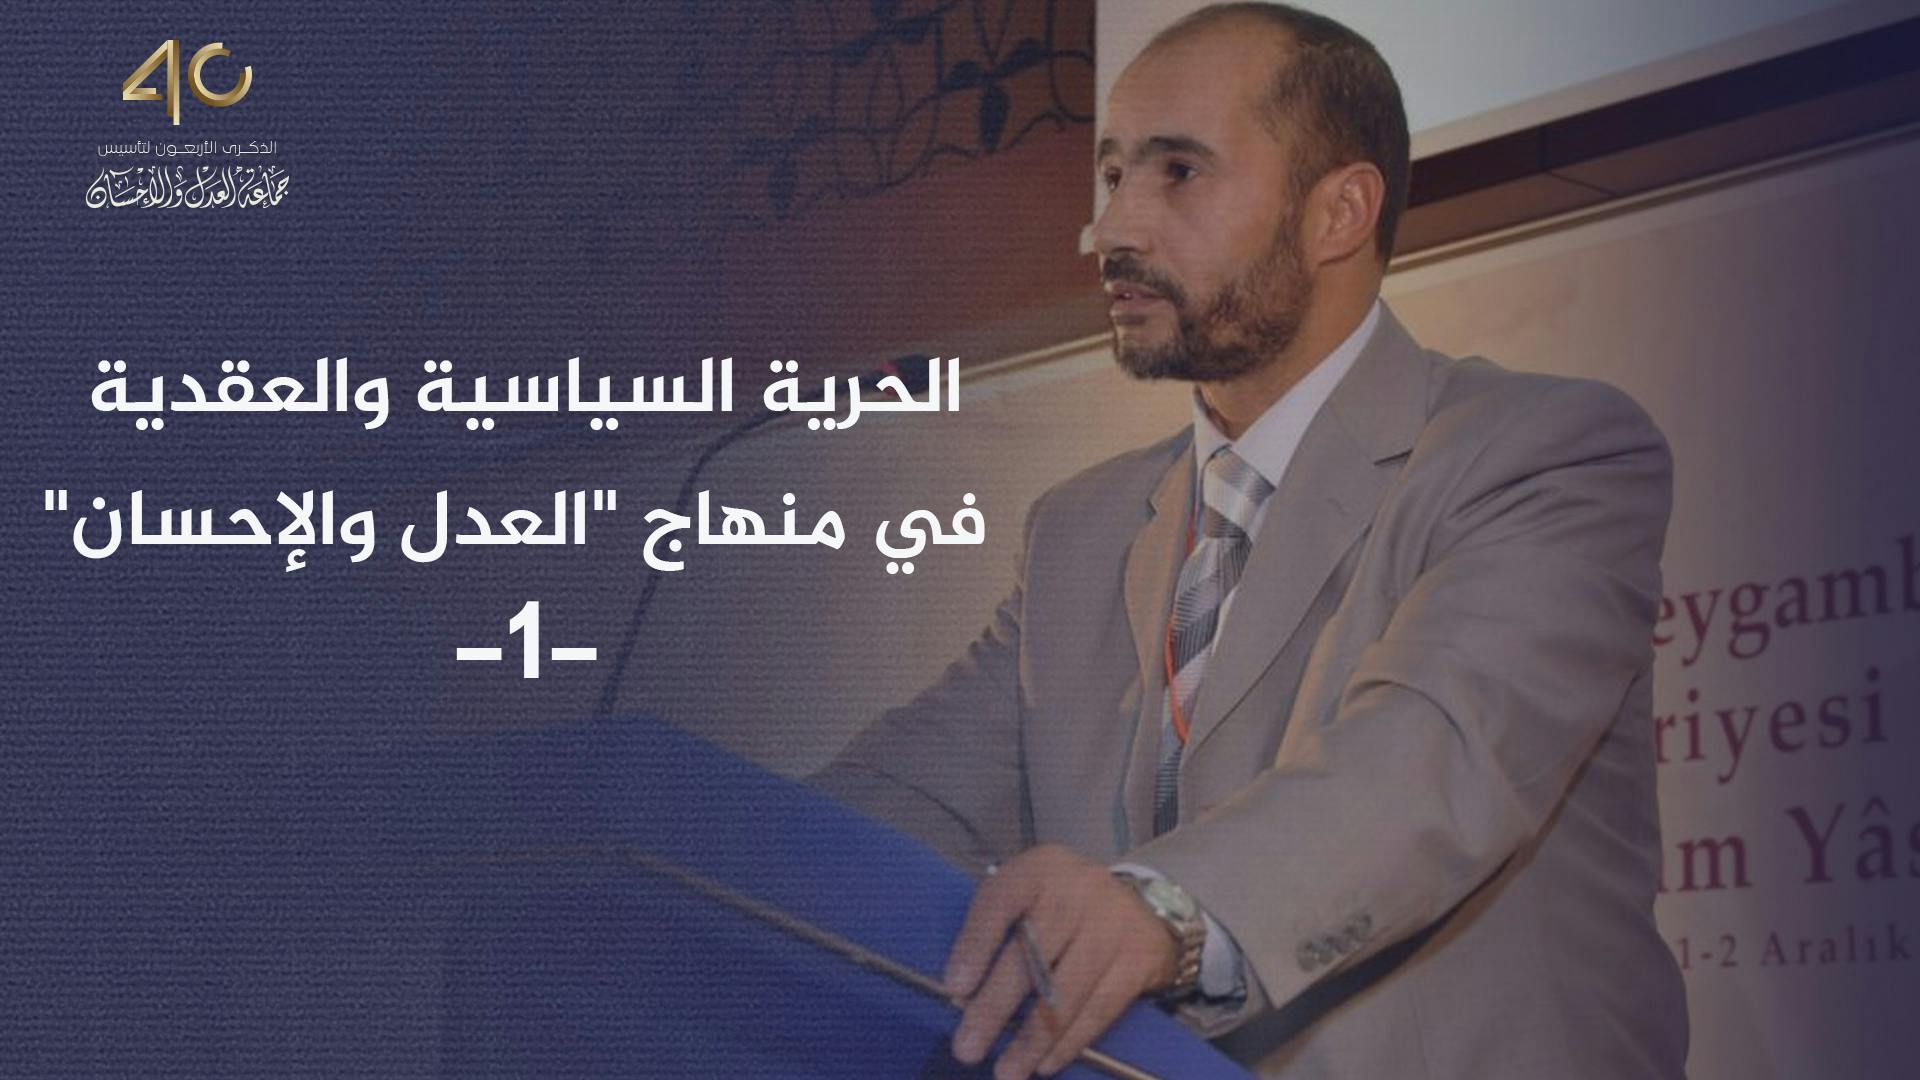 Cover Image for الحرية السياسية والعقدية في منهاج “العدل والإحسان” (1)